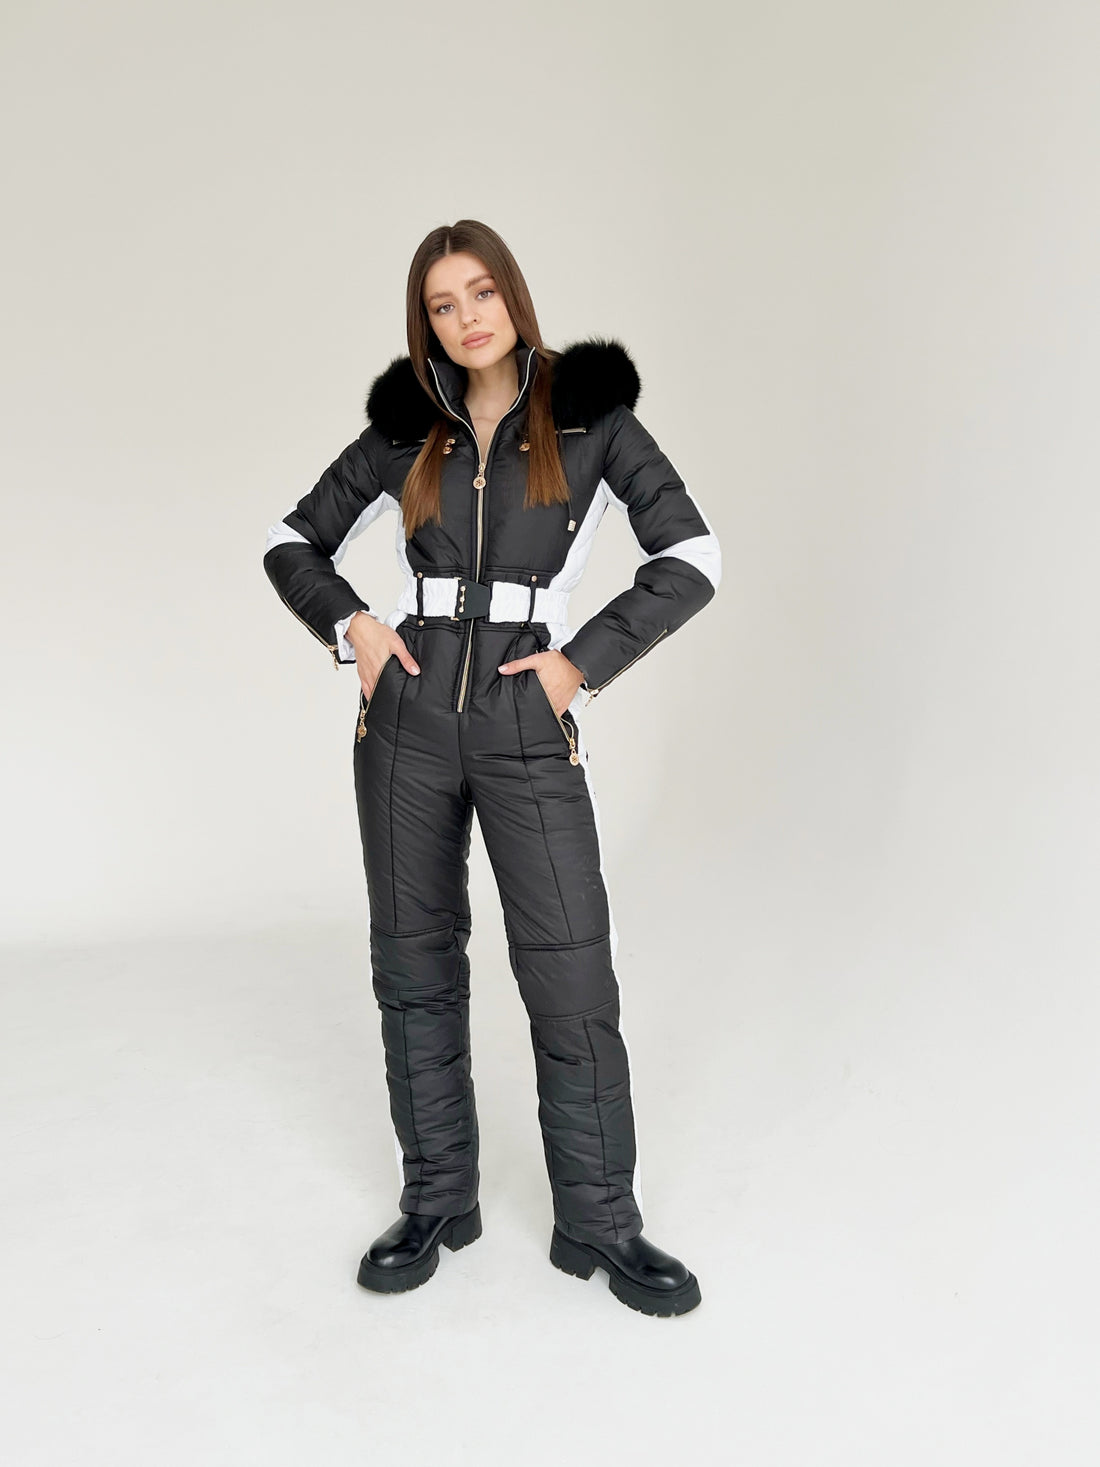 Black ski suit DENALI - BLACK - with WHITE side stripes snowsuit